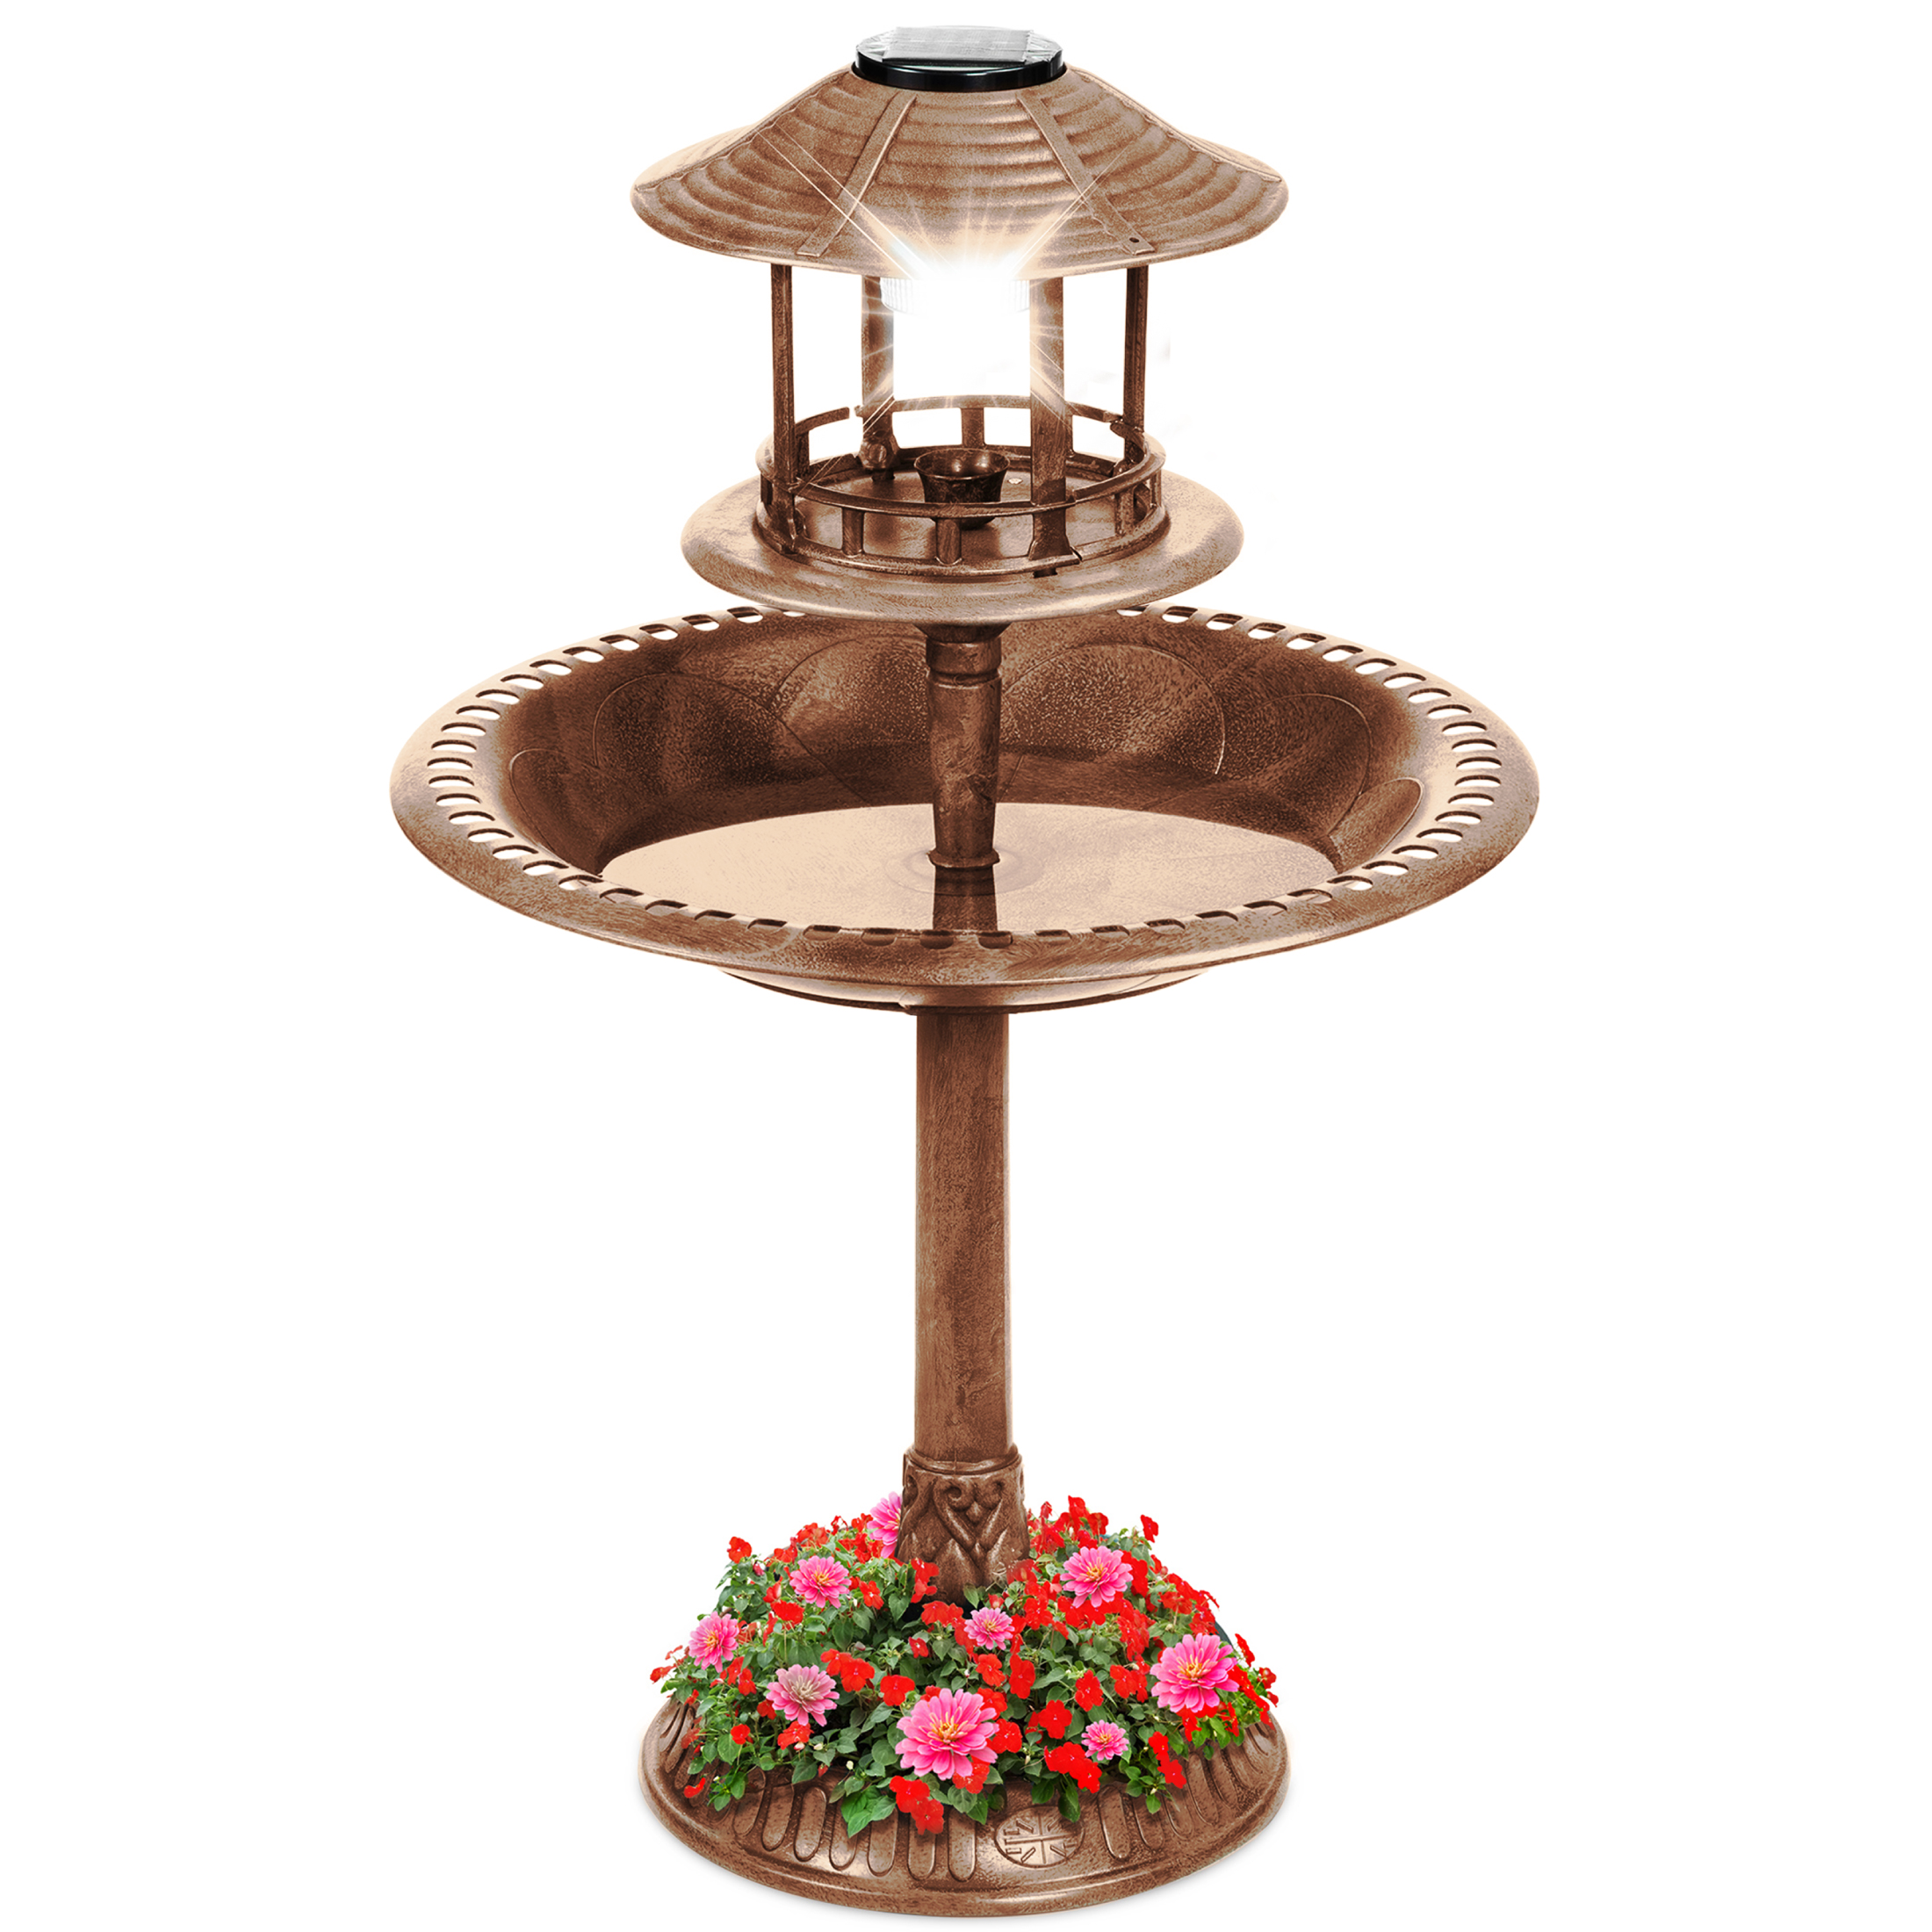 Best Choice Products Solar Outdoor Bird Bath Pedestal Fountain Garden Decoration w/ Fillable Planter Base - Bronze - image 1 of 8